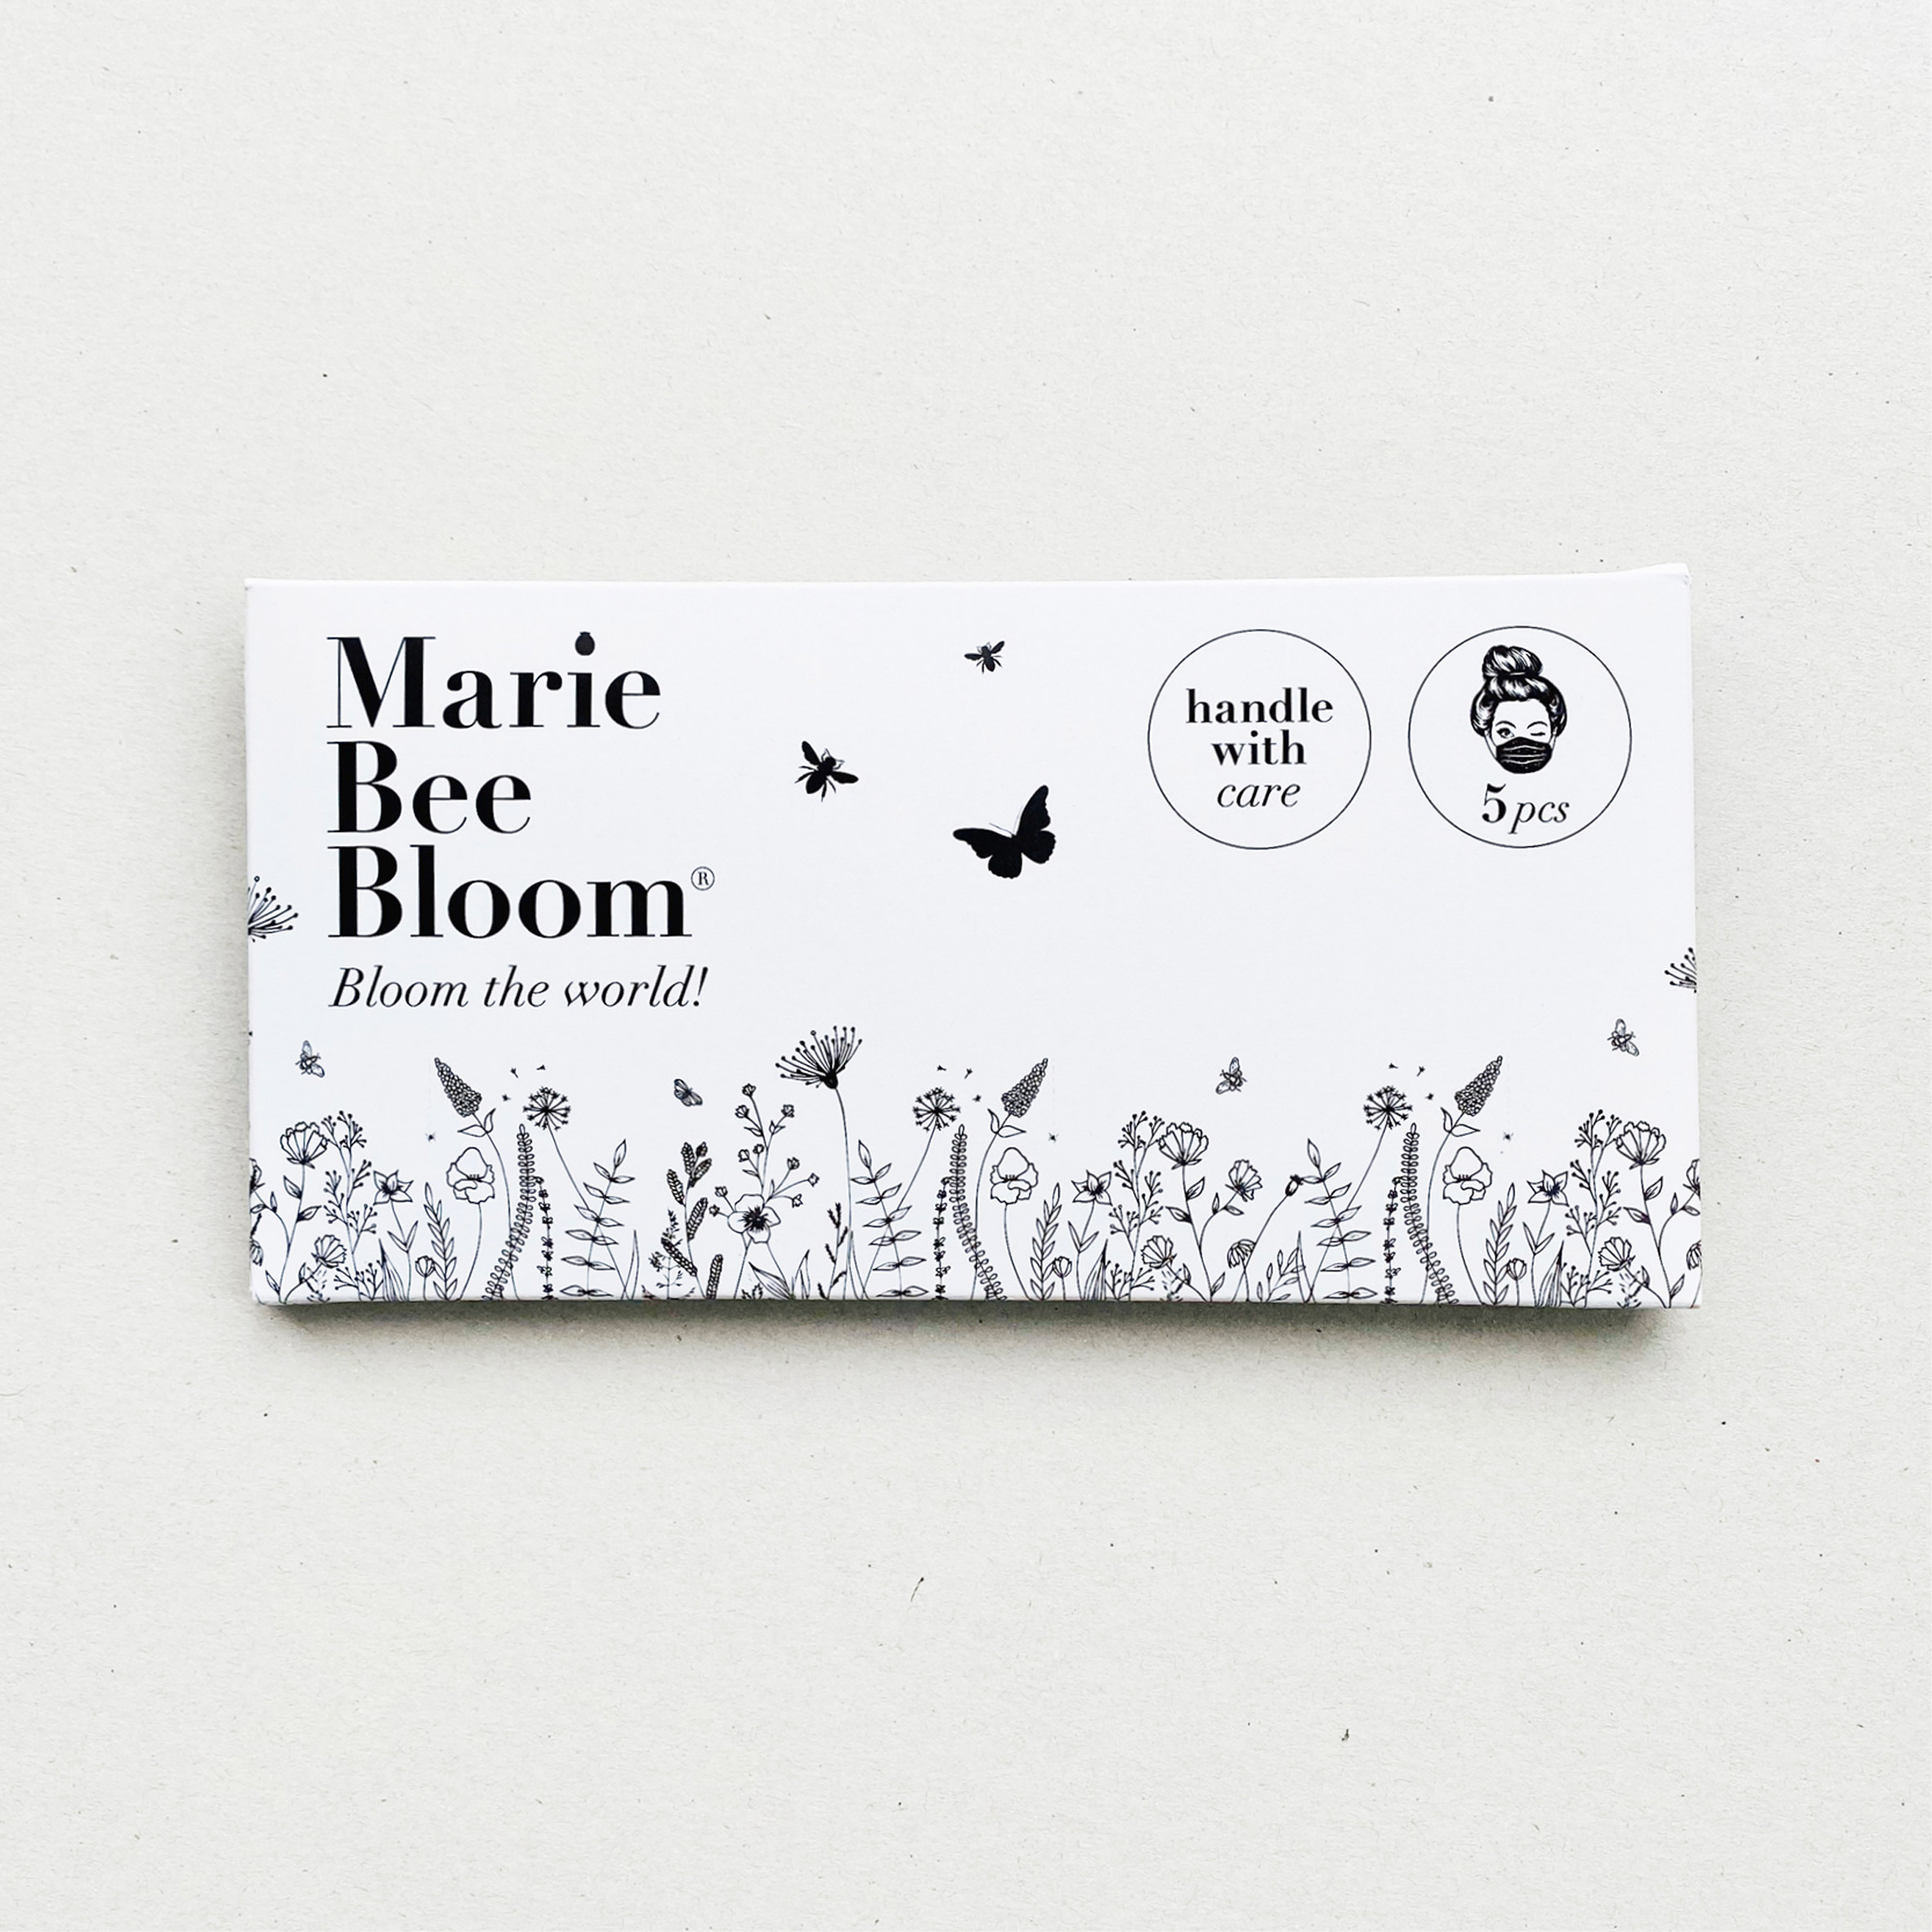 Marie Bee Bloom face mask packaging